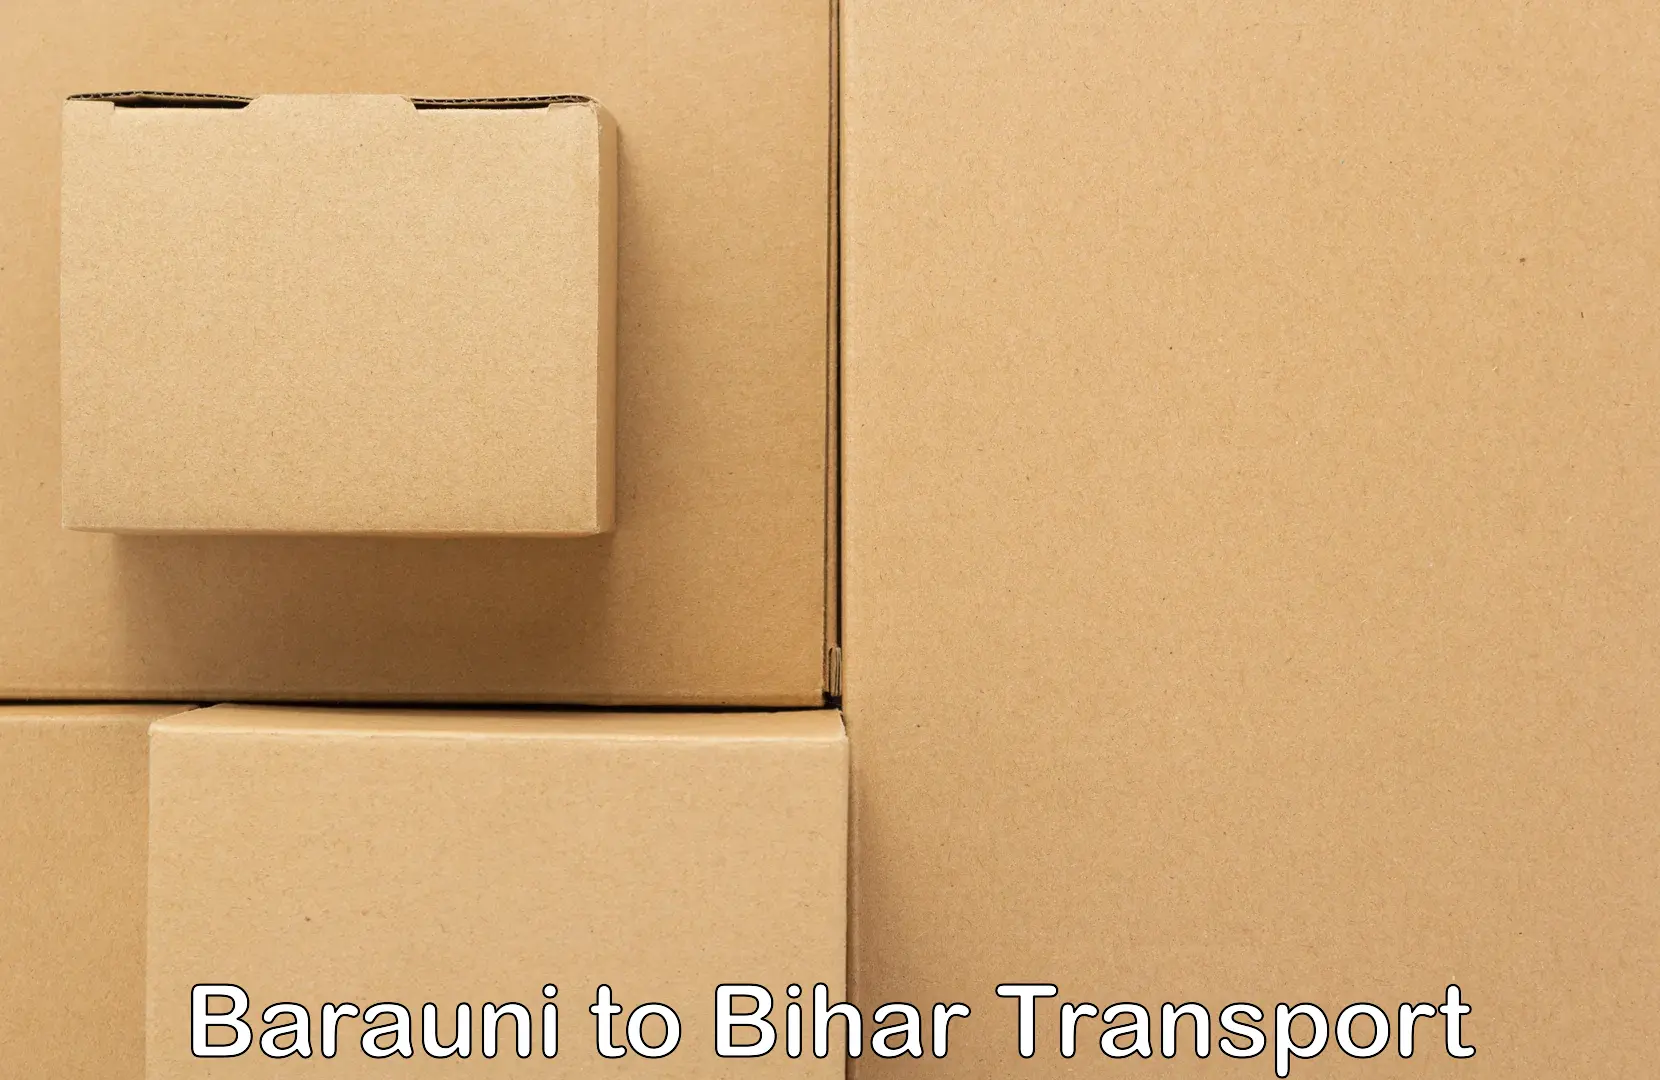 Sending bike to another city Barauni to Bihar